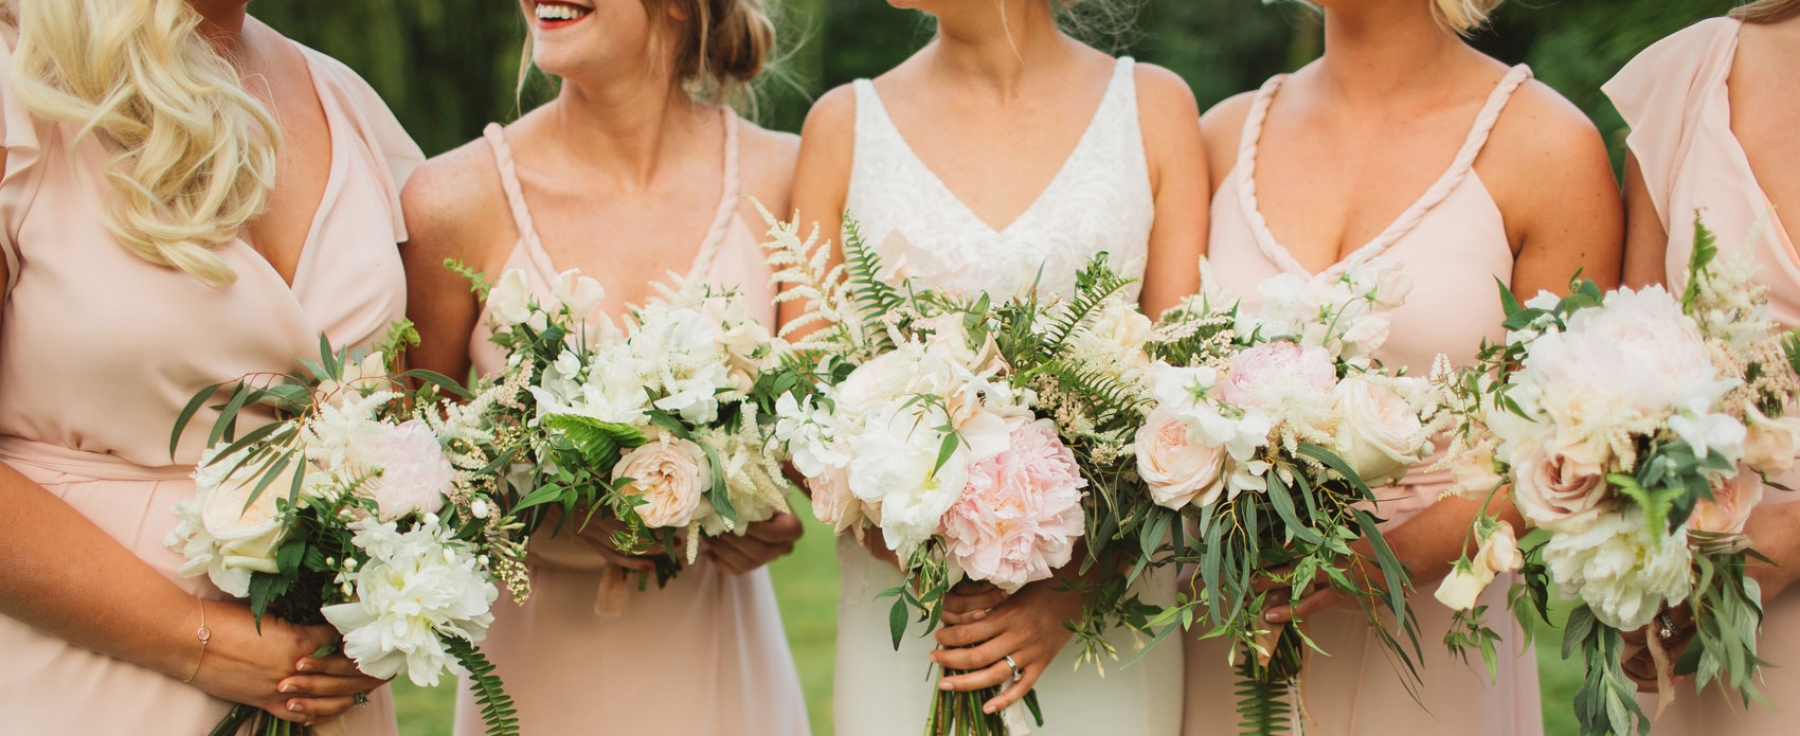 joanne-truby-wedding-florals-slide-1